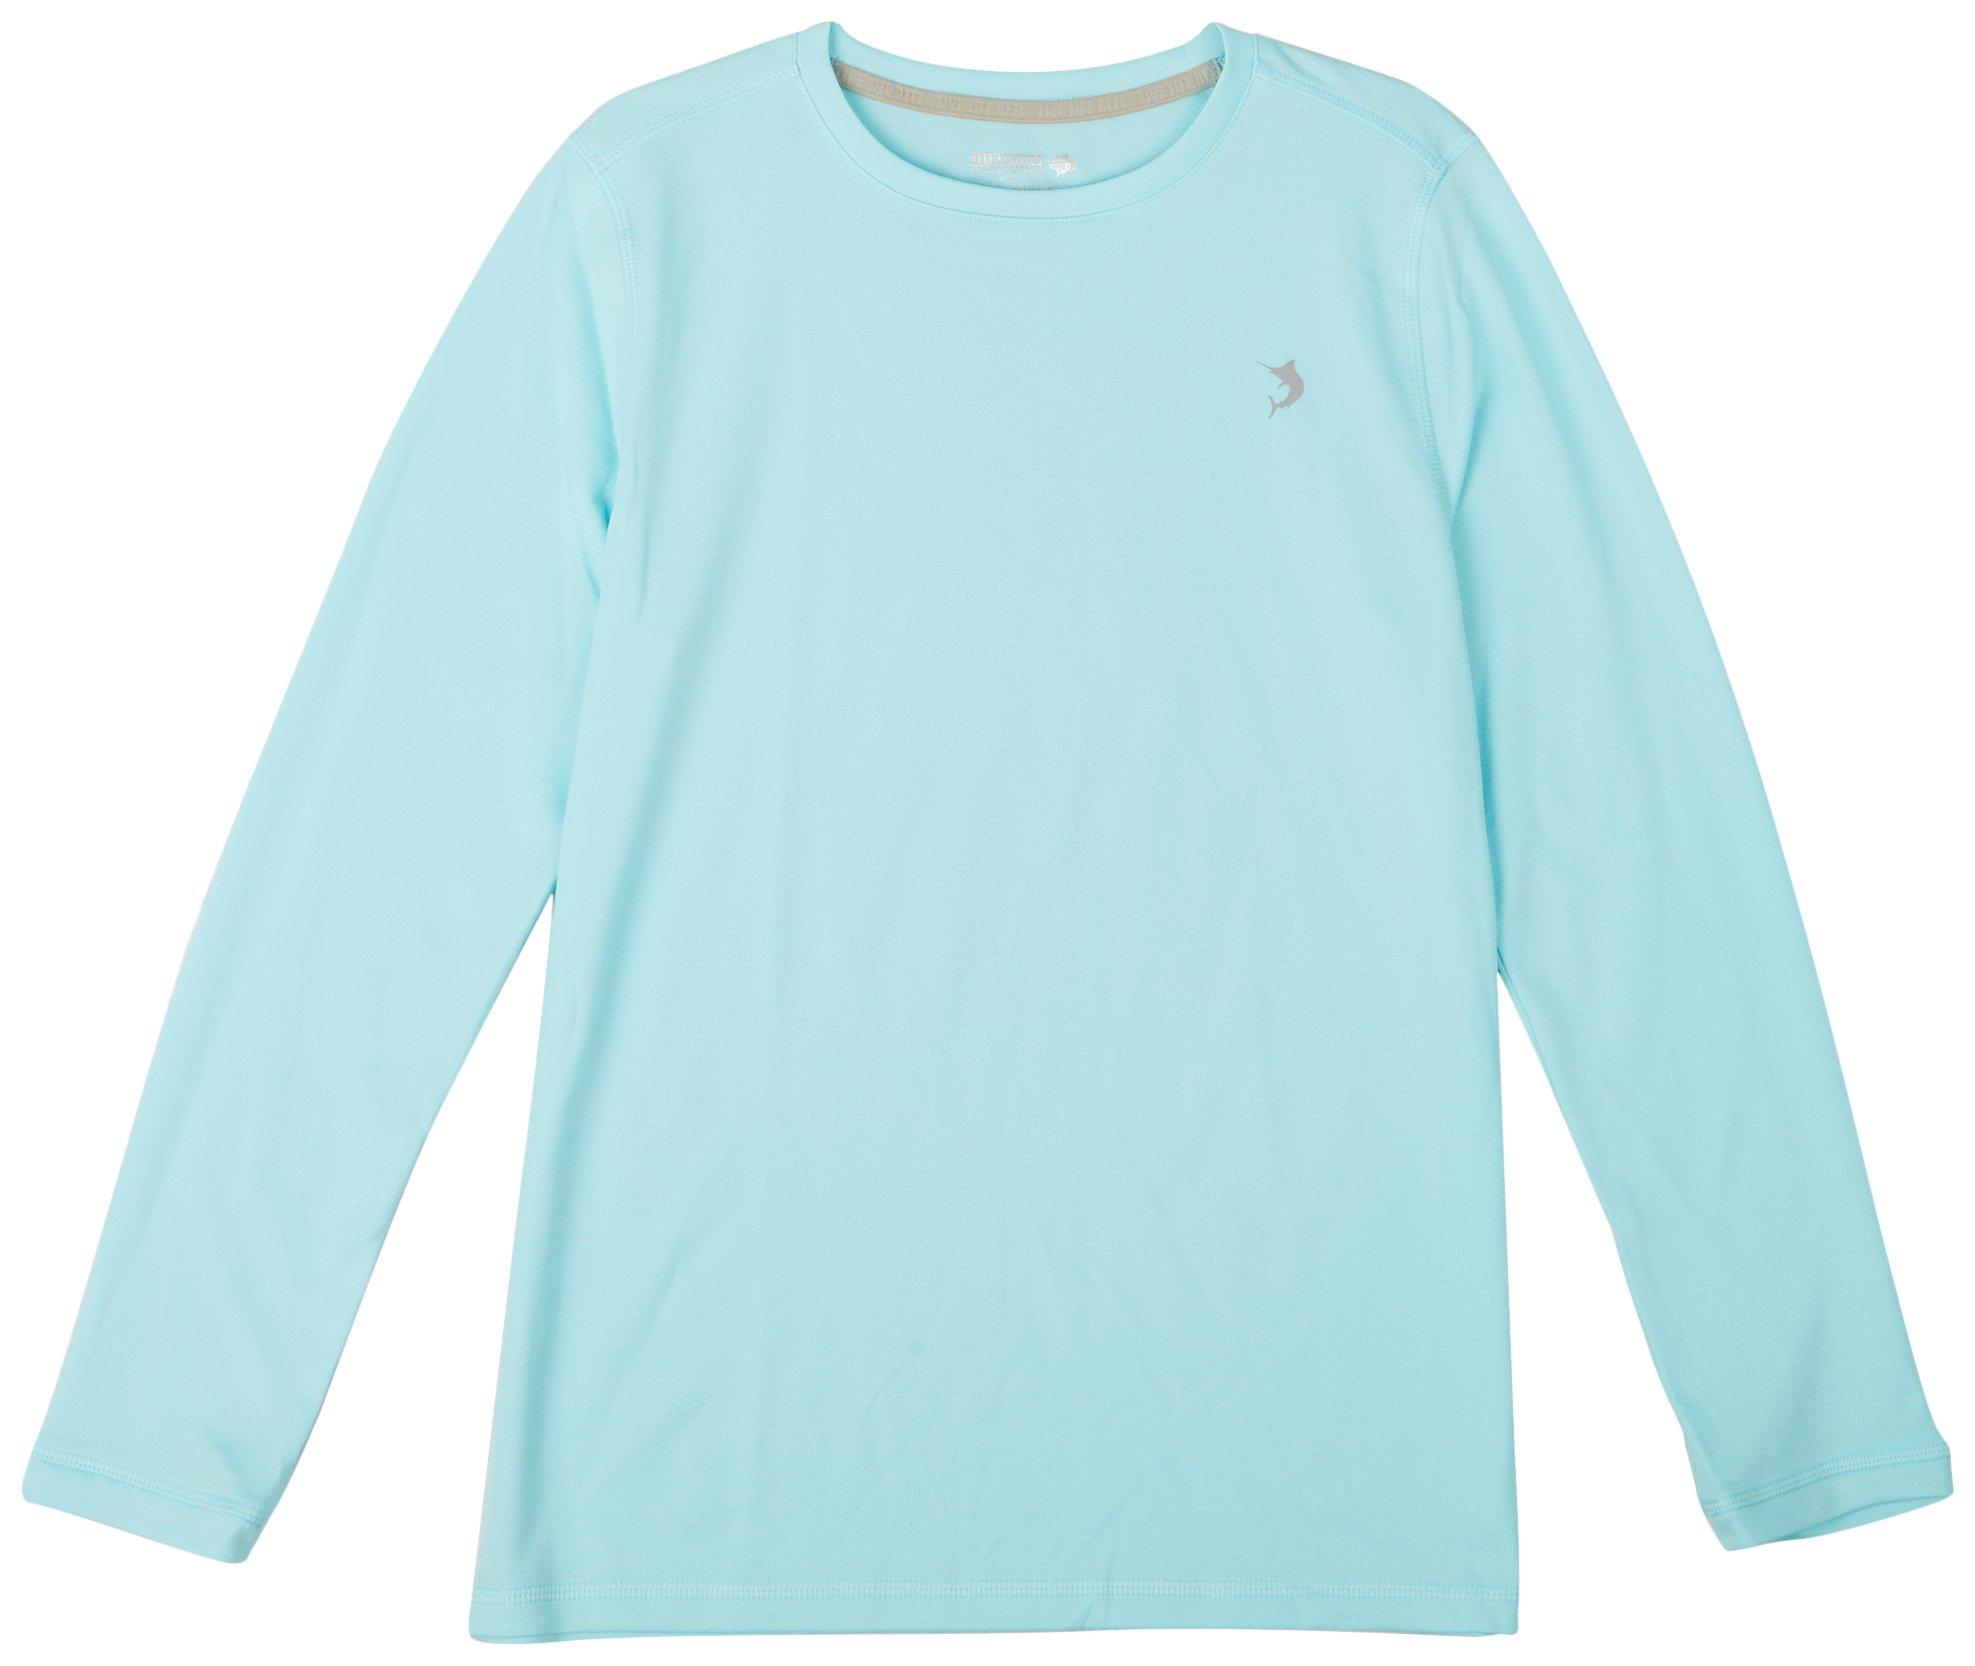 Reel Legends Boys Blue Tops, Shirts & T-Shirts for Boys